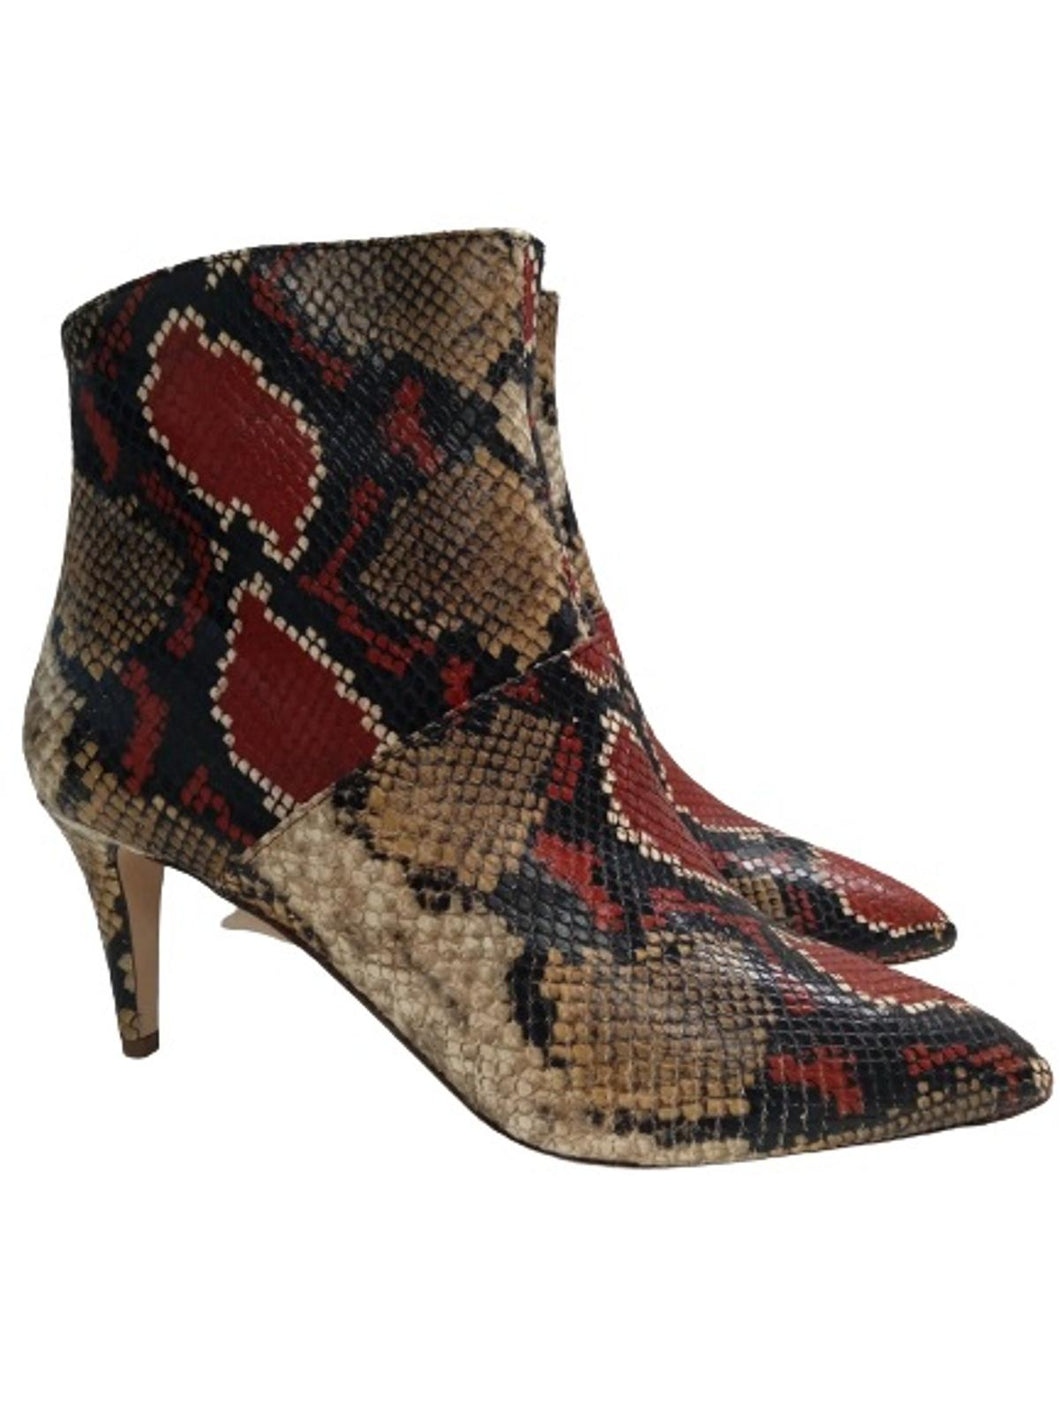 L.K. BENNETT Ladies Multicoloured Leather Snake Effect Heel Boots Size UK7